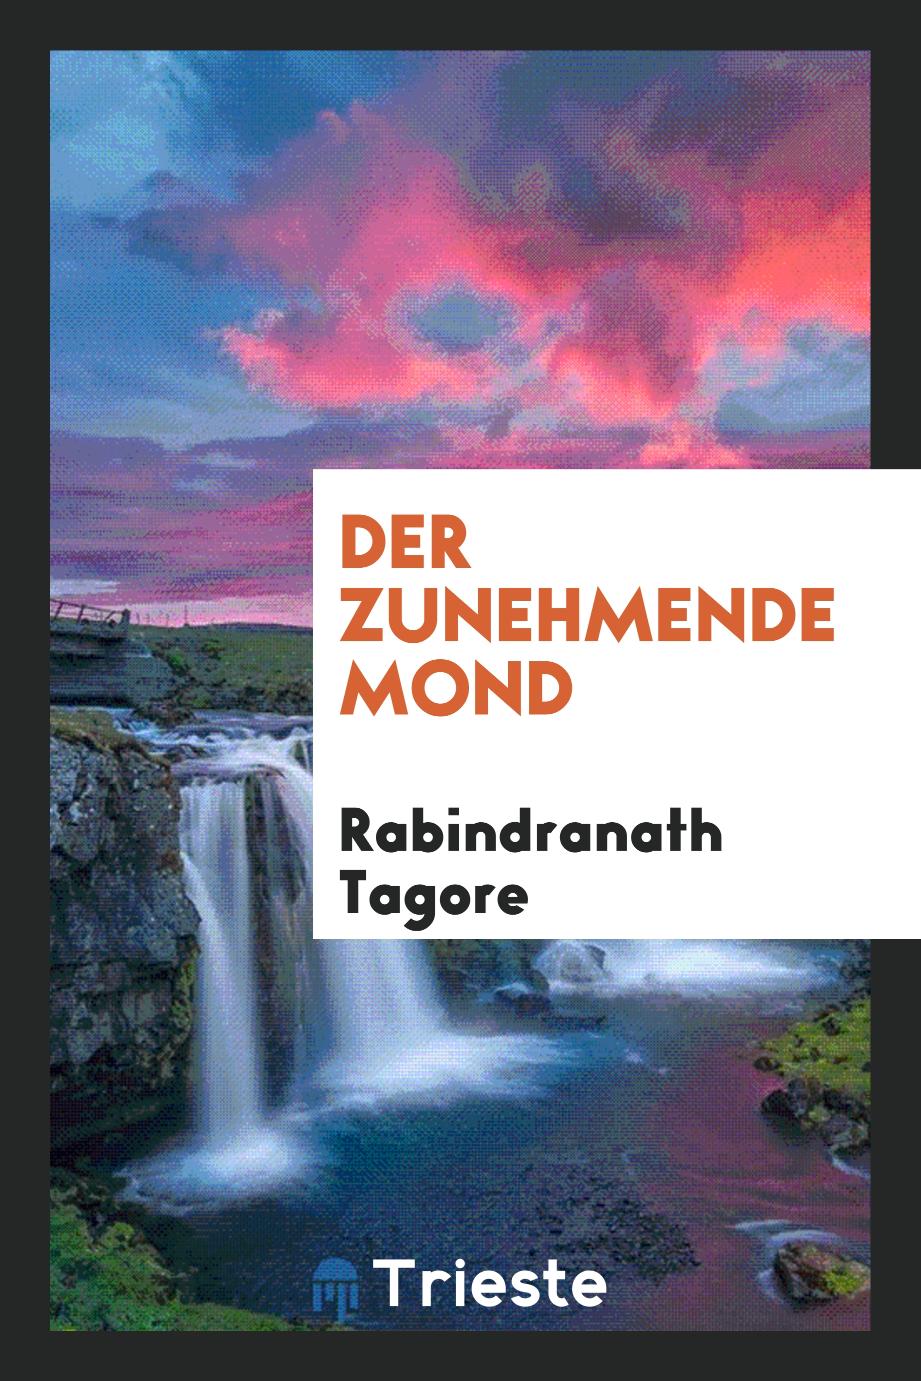 Rabindranath Tagore - Der zunehmende Mond